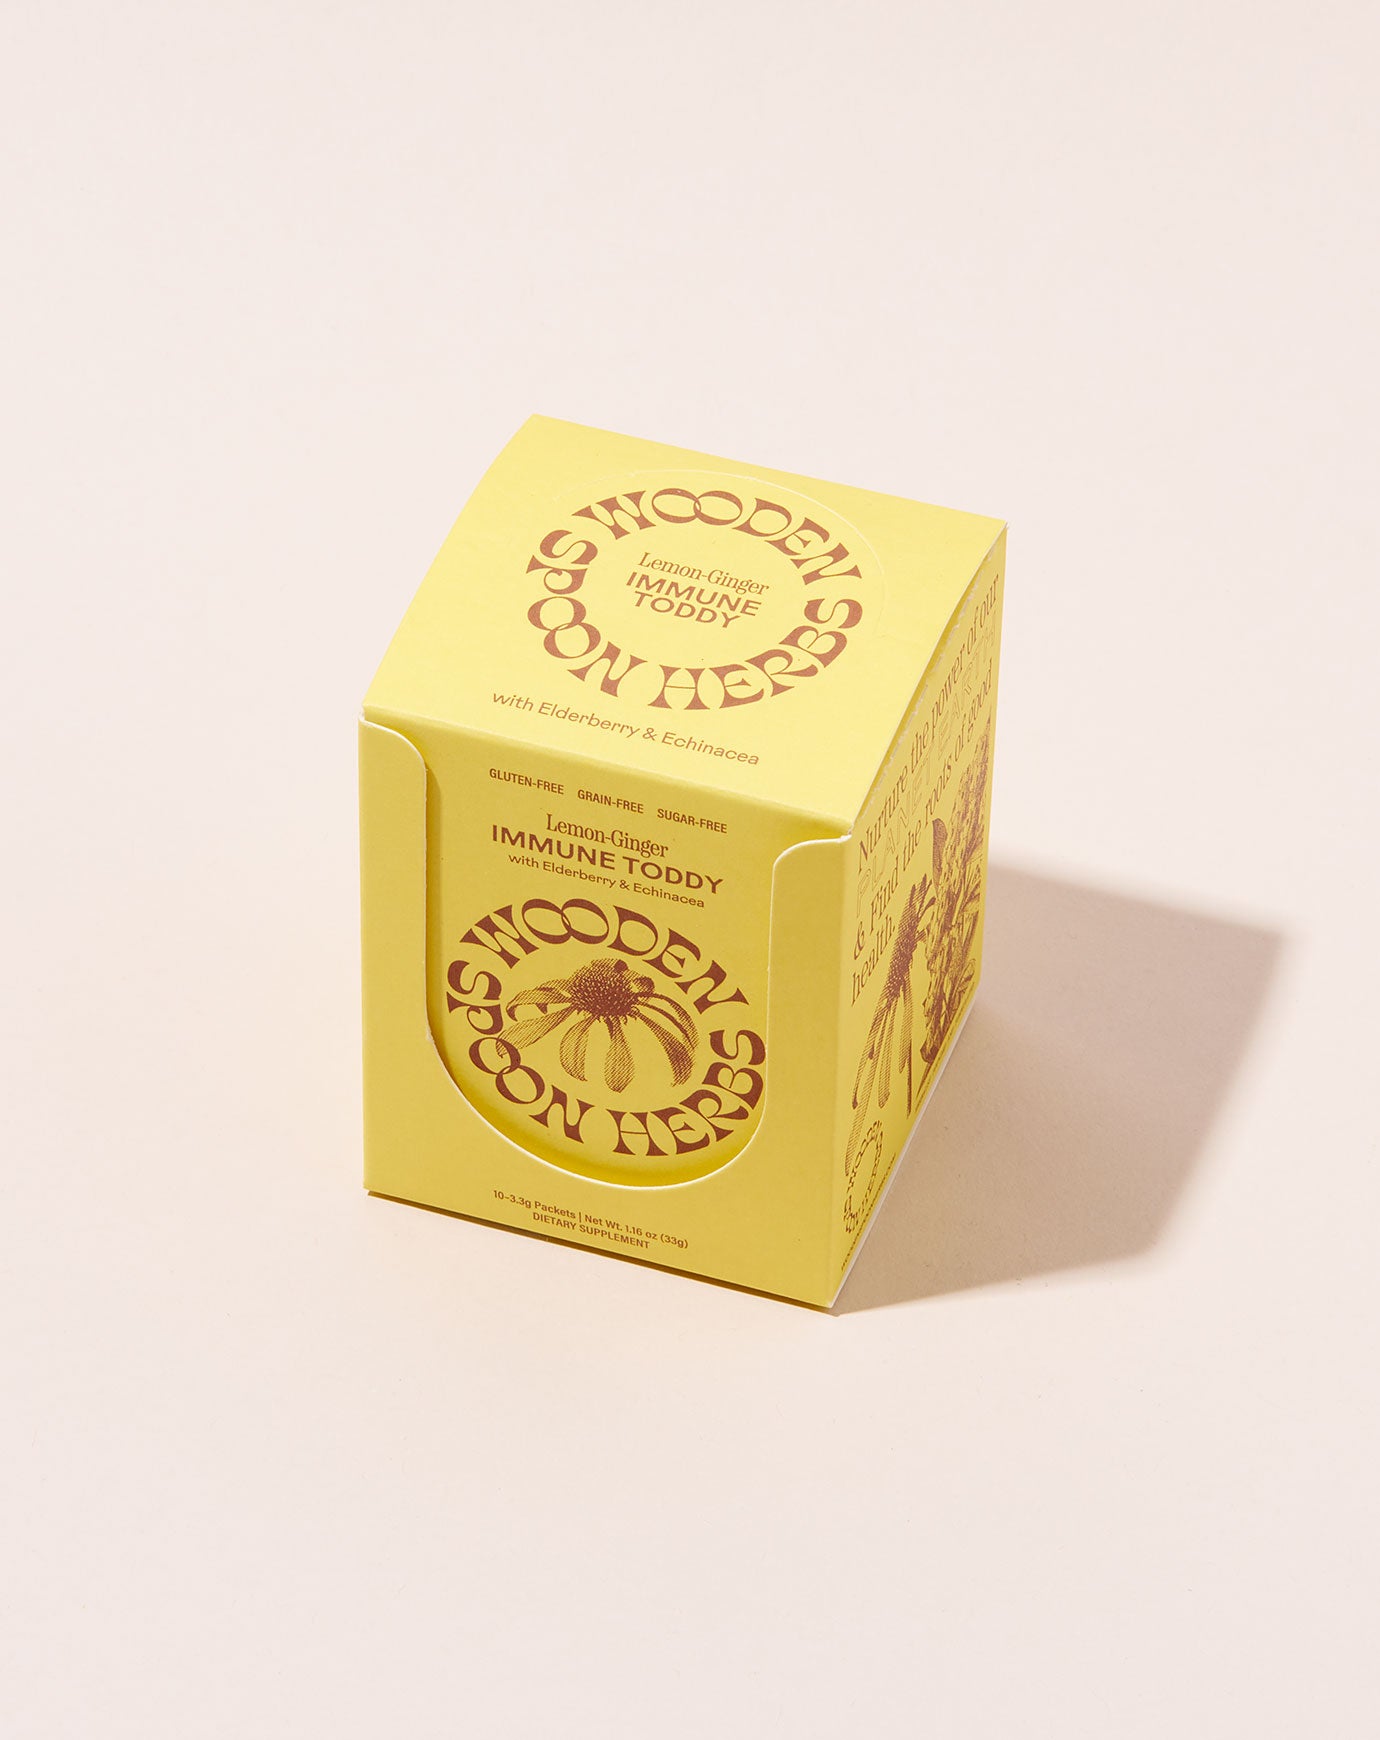 Wooden Spoon Herbs Lemon-Ginger Immune Toddy Box